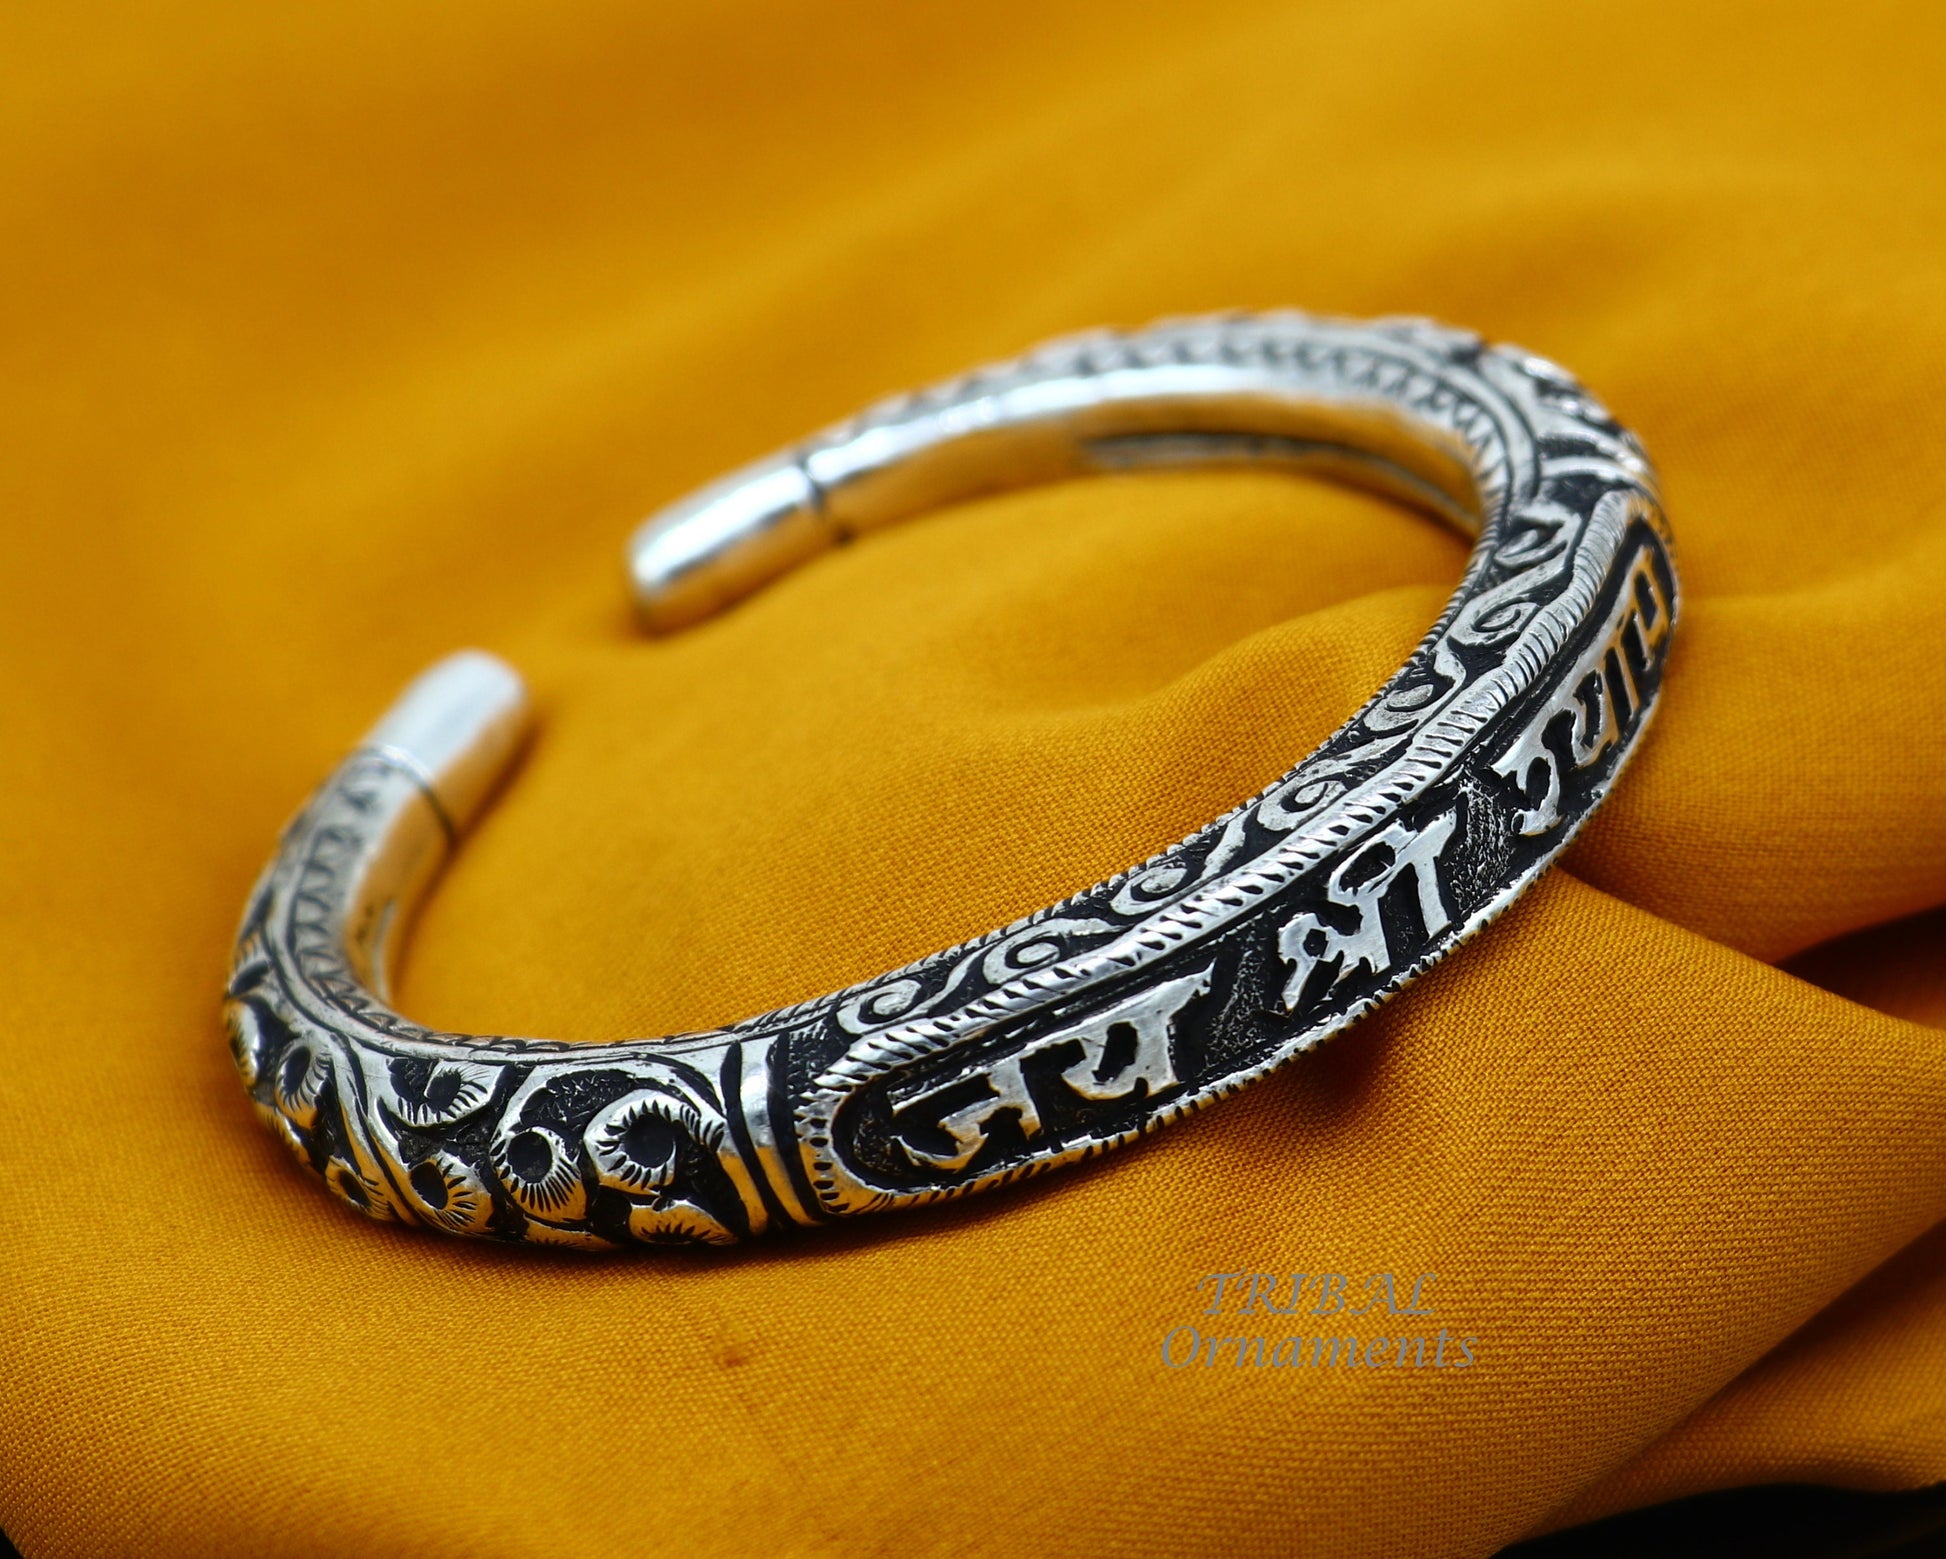 Divine kada lord krishna jai shri shyam matra handmade 925 sterling silver kada, best unisex bangle kada jewelry from india nsk712 2-6 OR 2.375